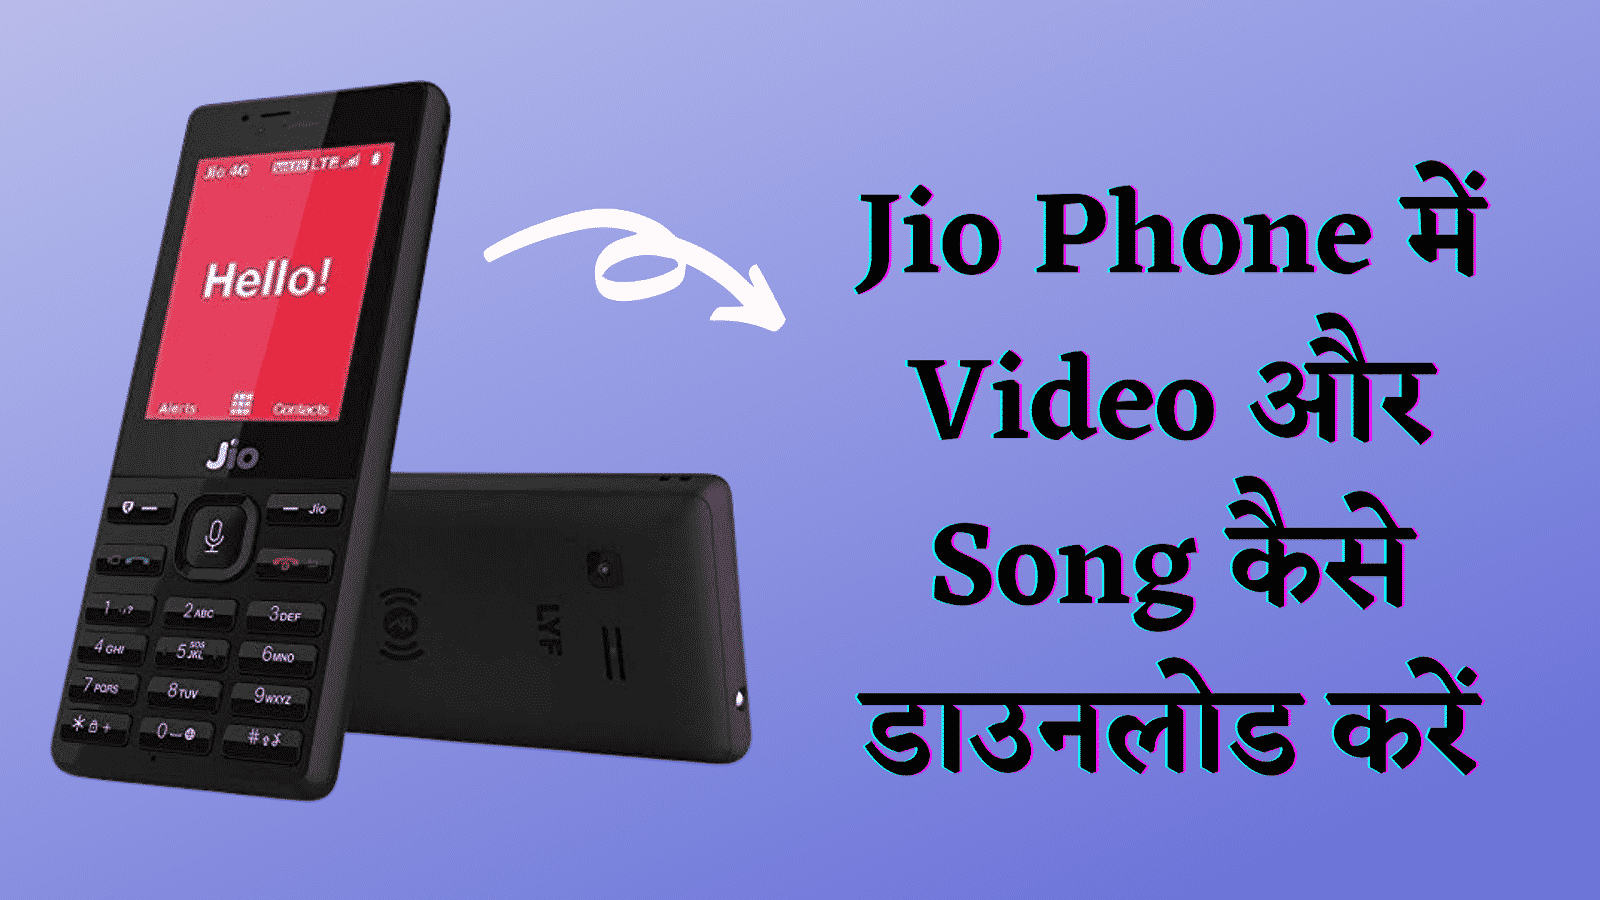 Jio phone me video kaise download kare